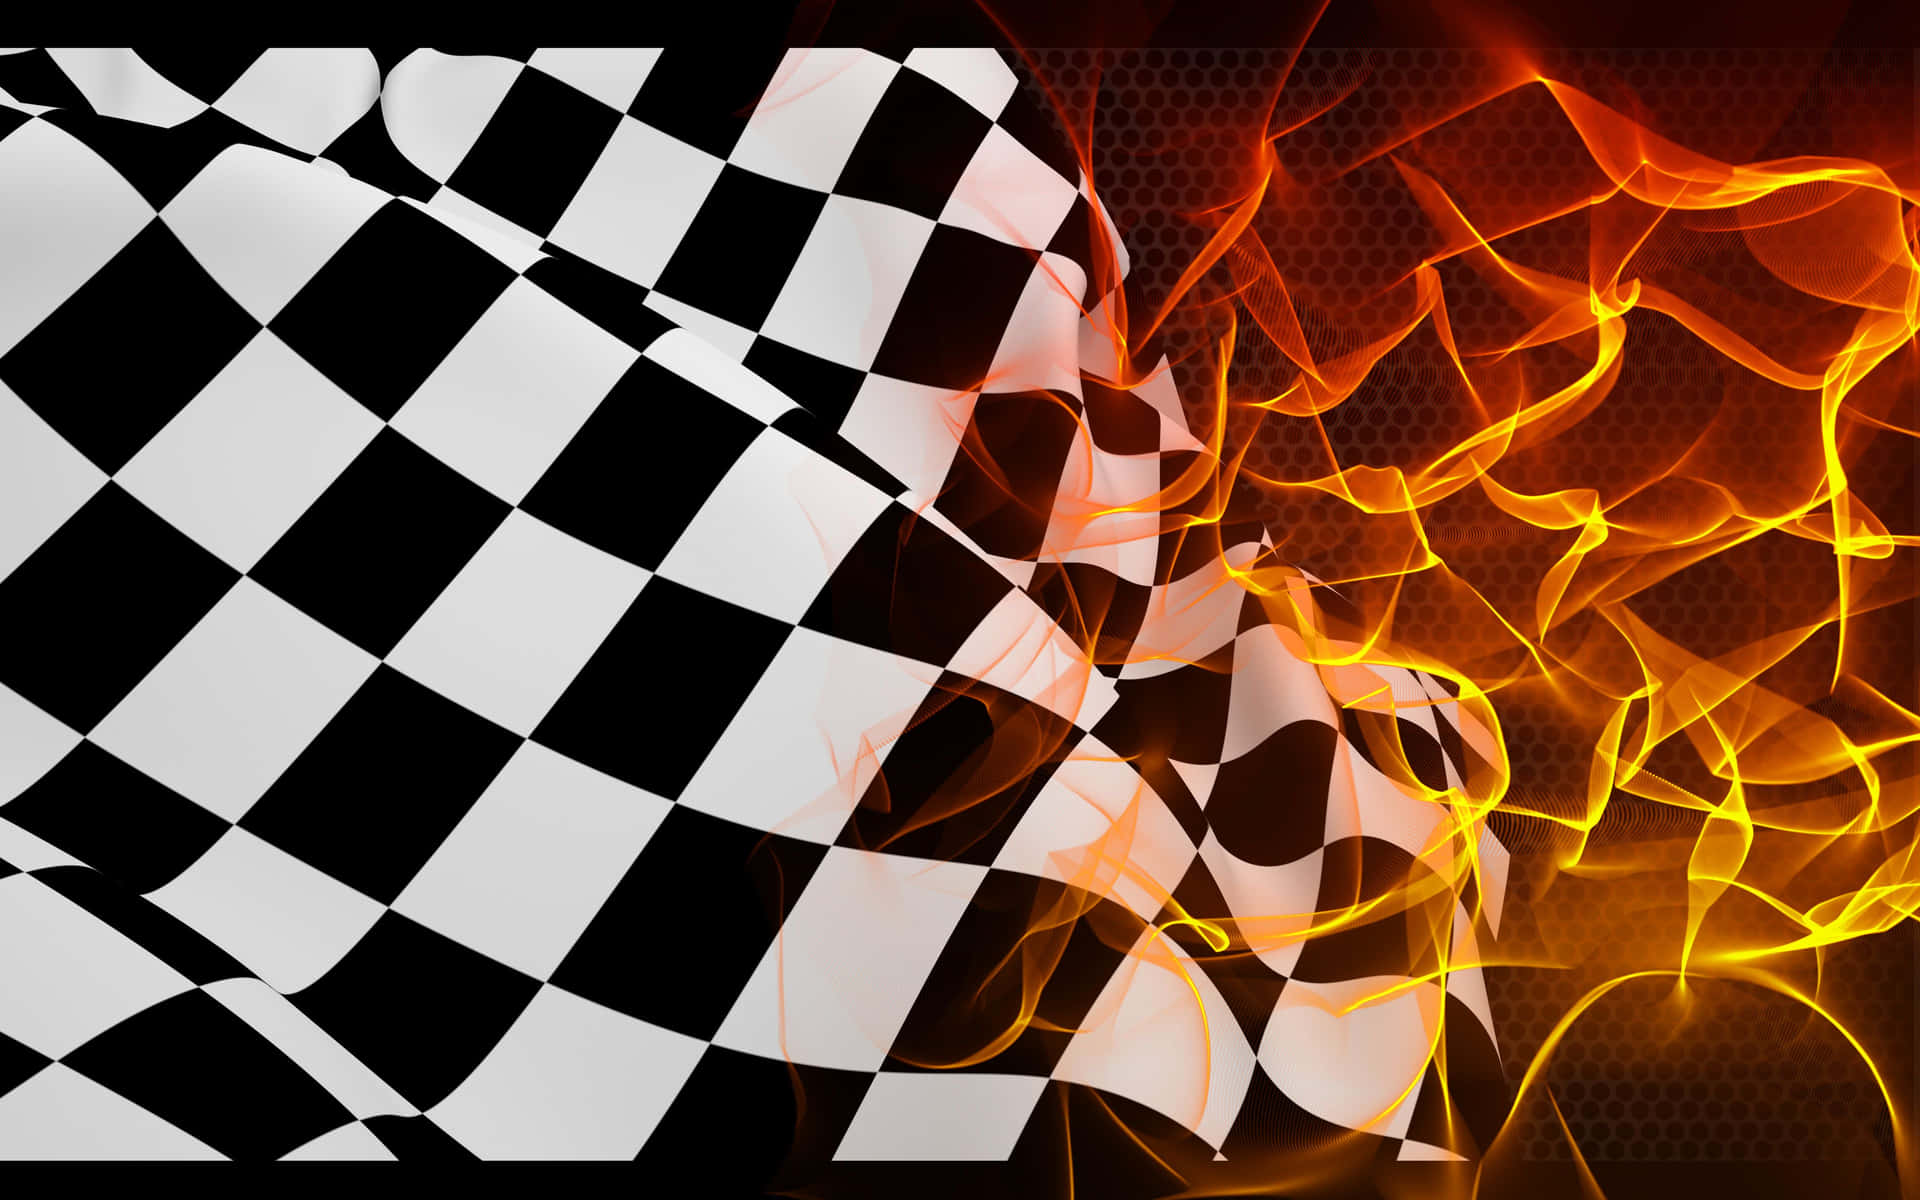 The winner’s reward - The Checkered Flag.